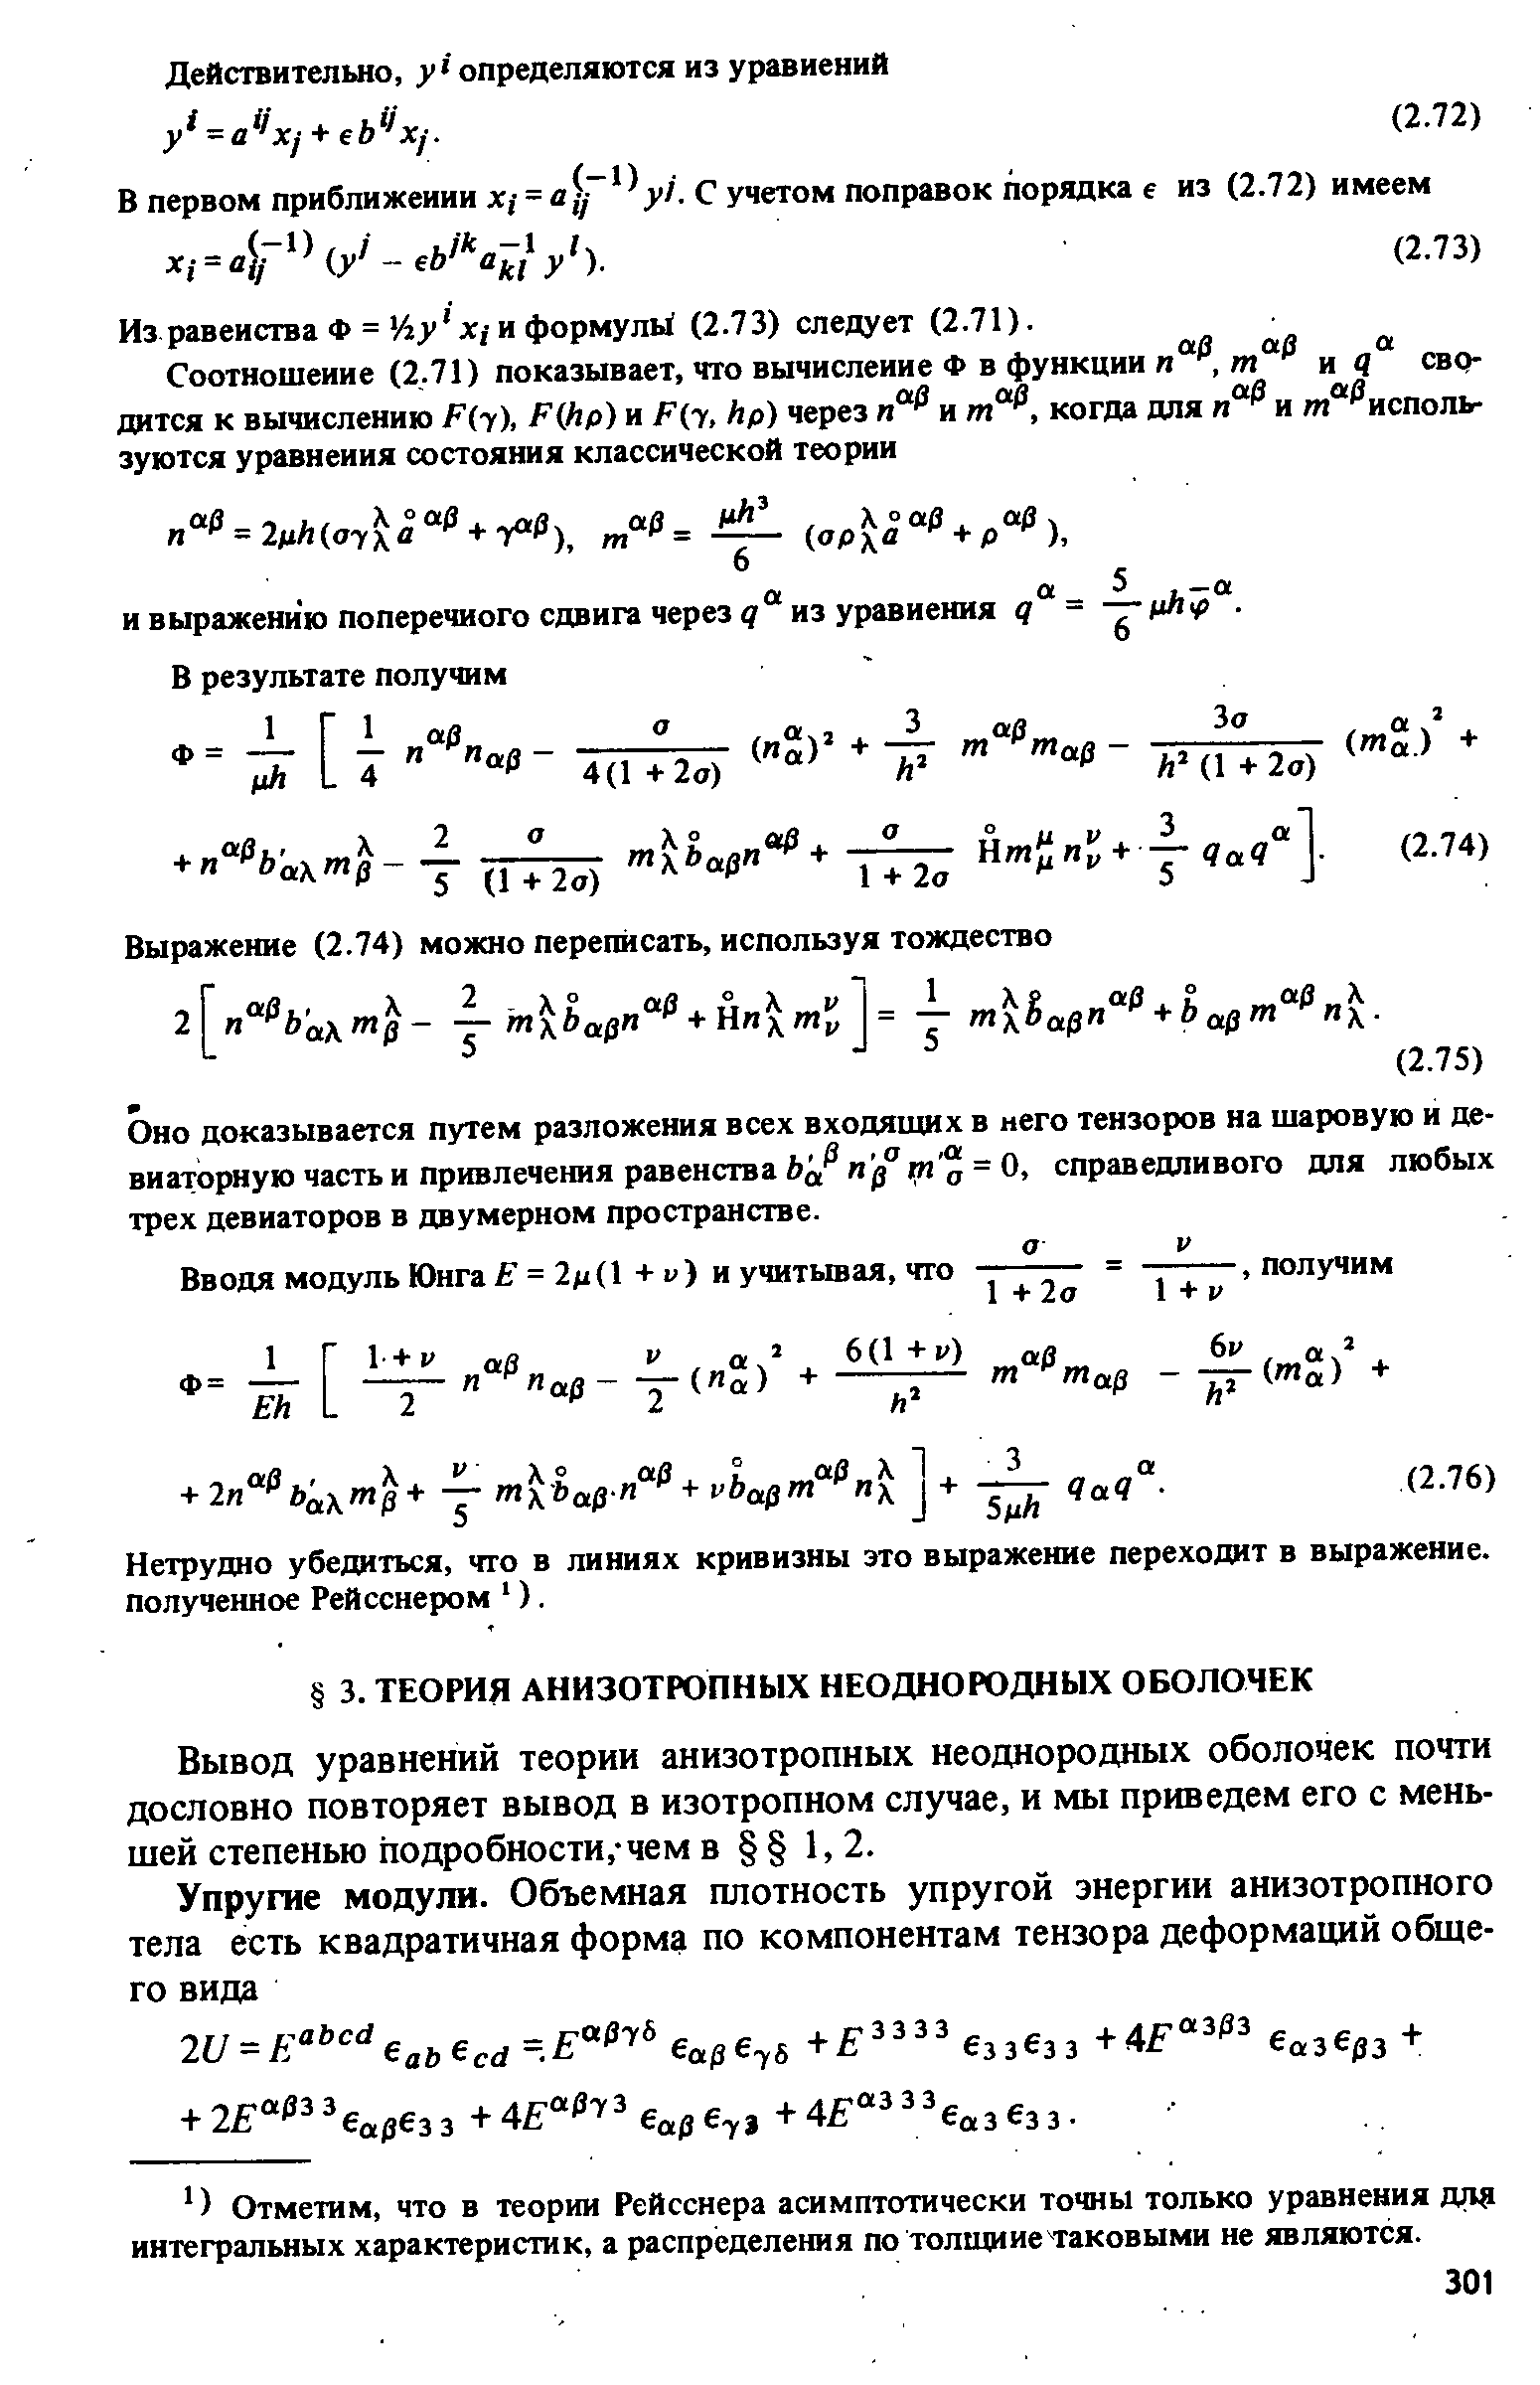 Из равенства Ф = Л у х,- и формулы (2.73) следует (2.71).
